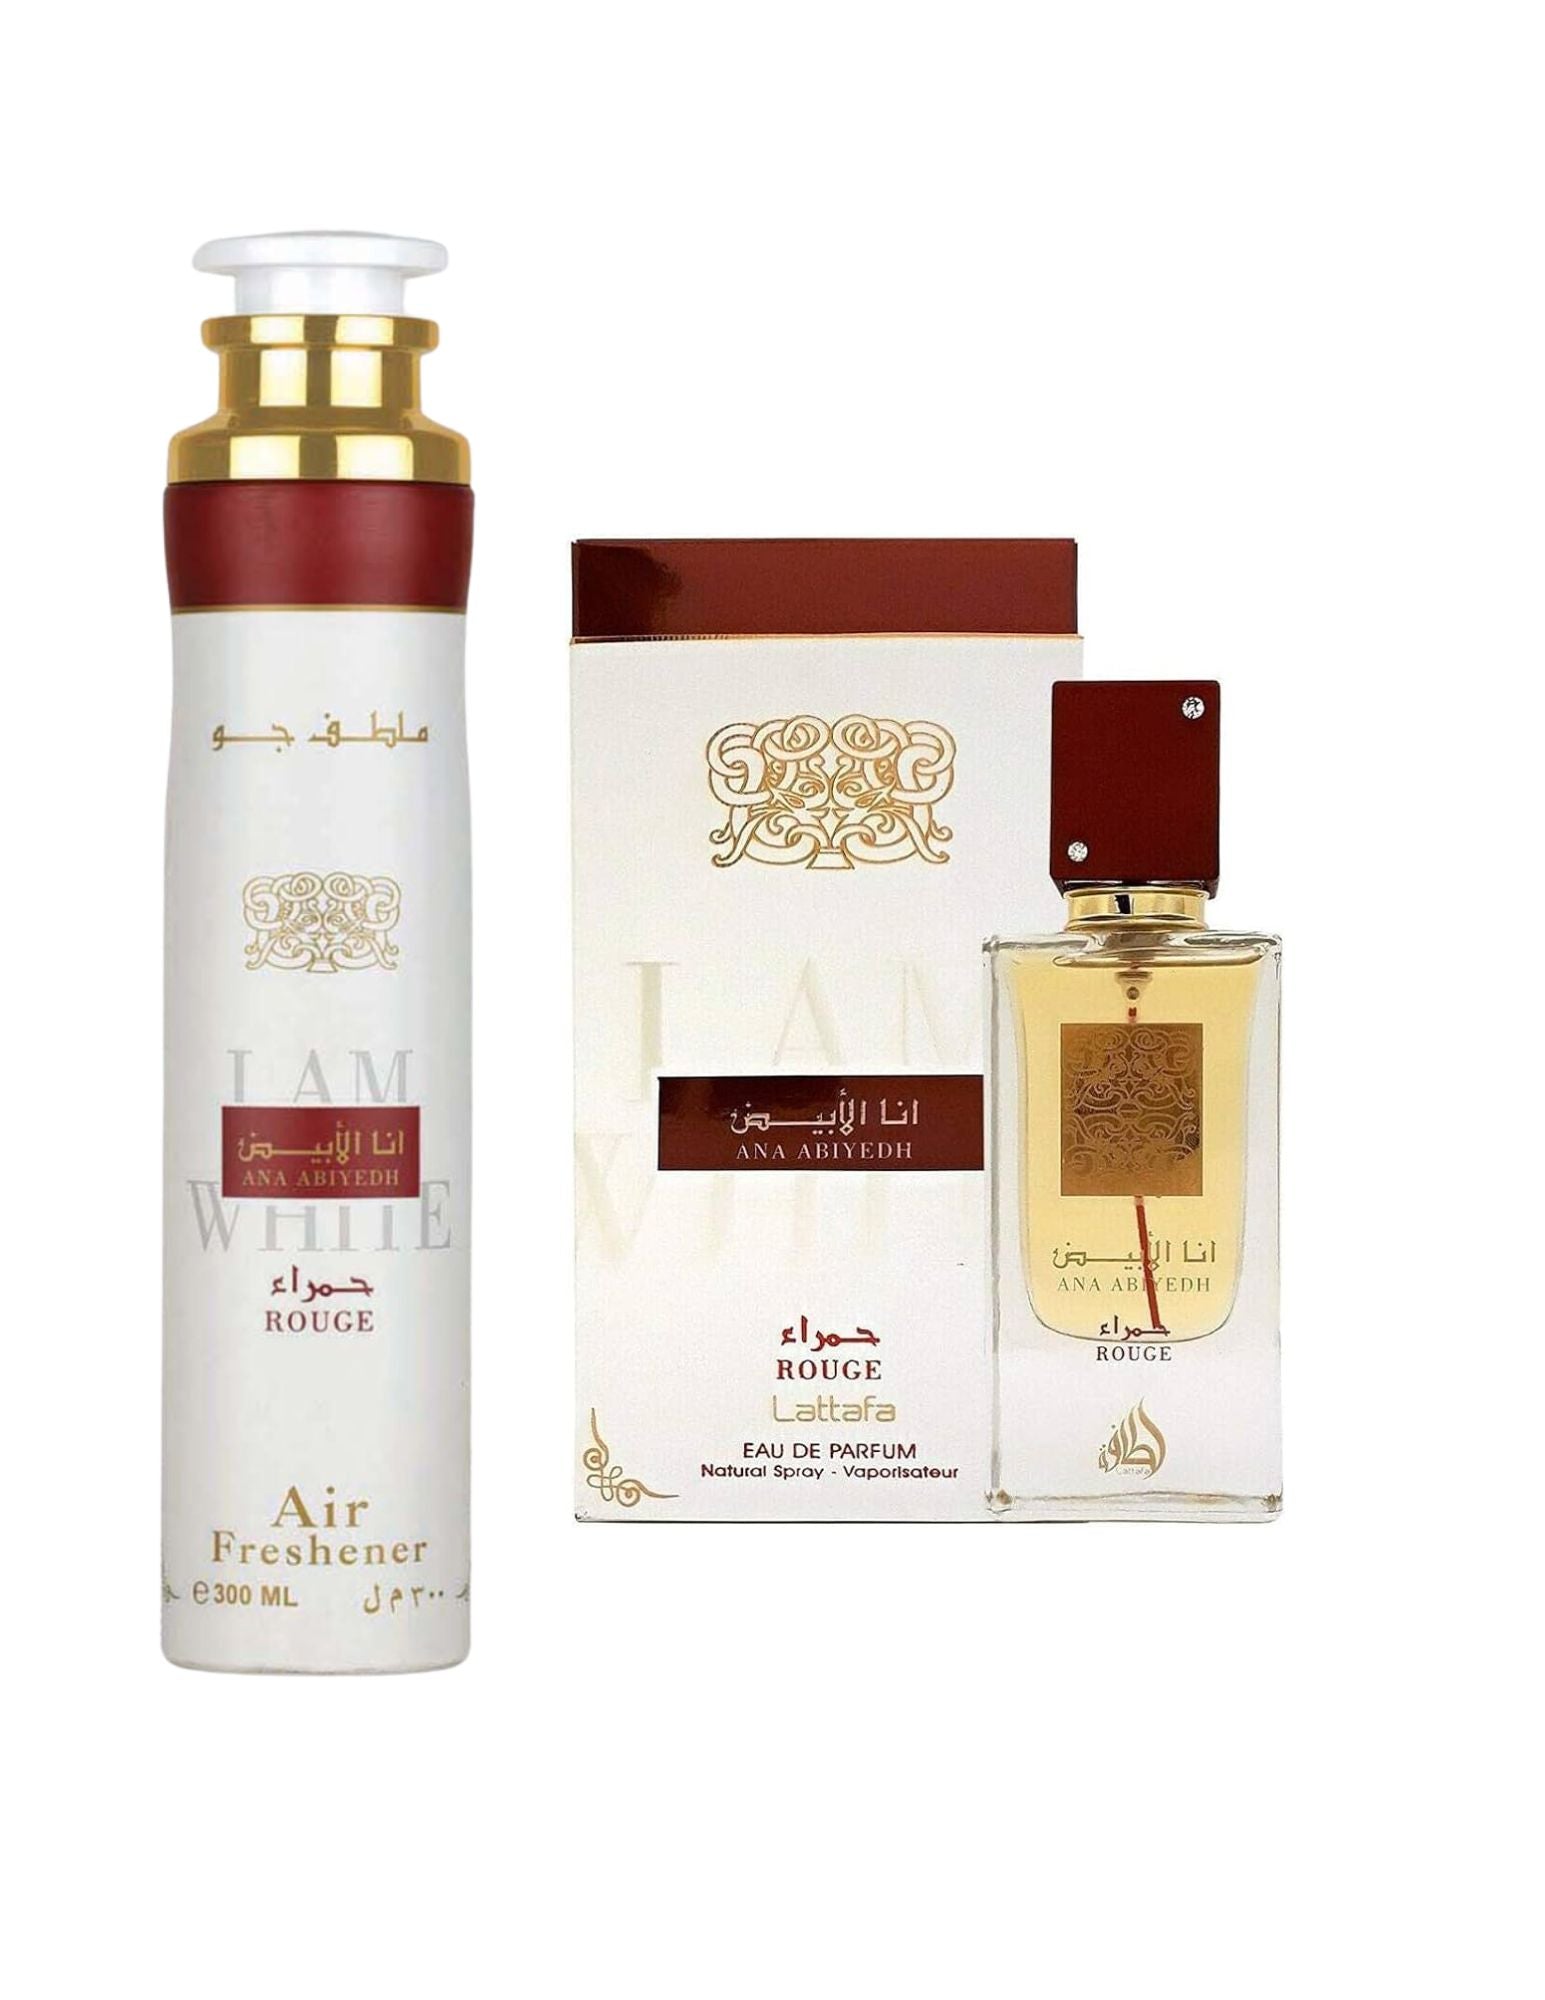 Ana Abiyedh Rouge Perfume and Air Freshener Bundle Pack